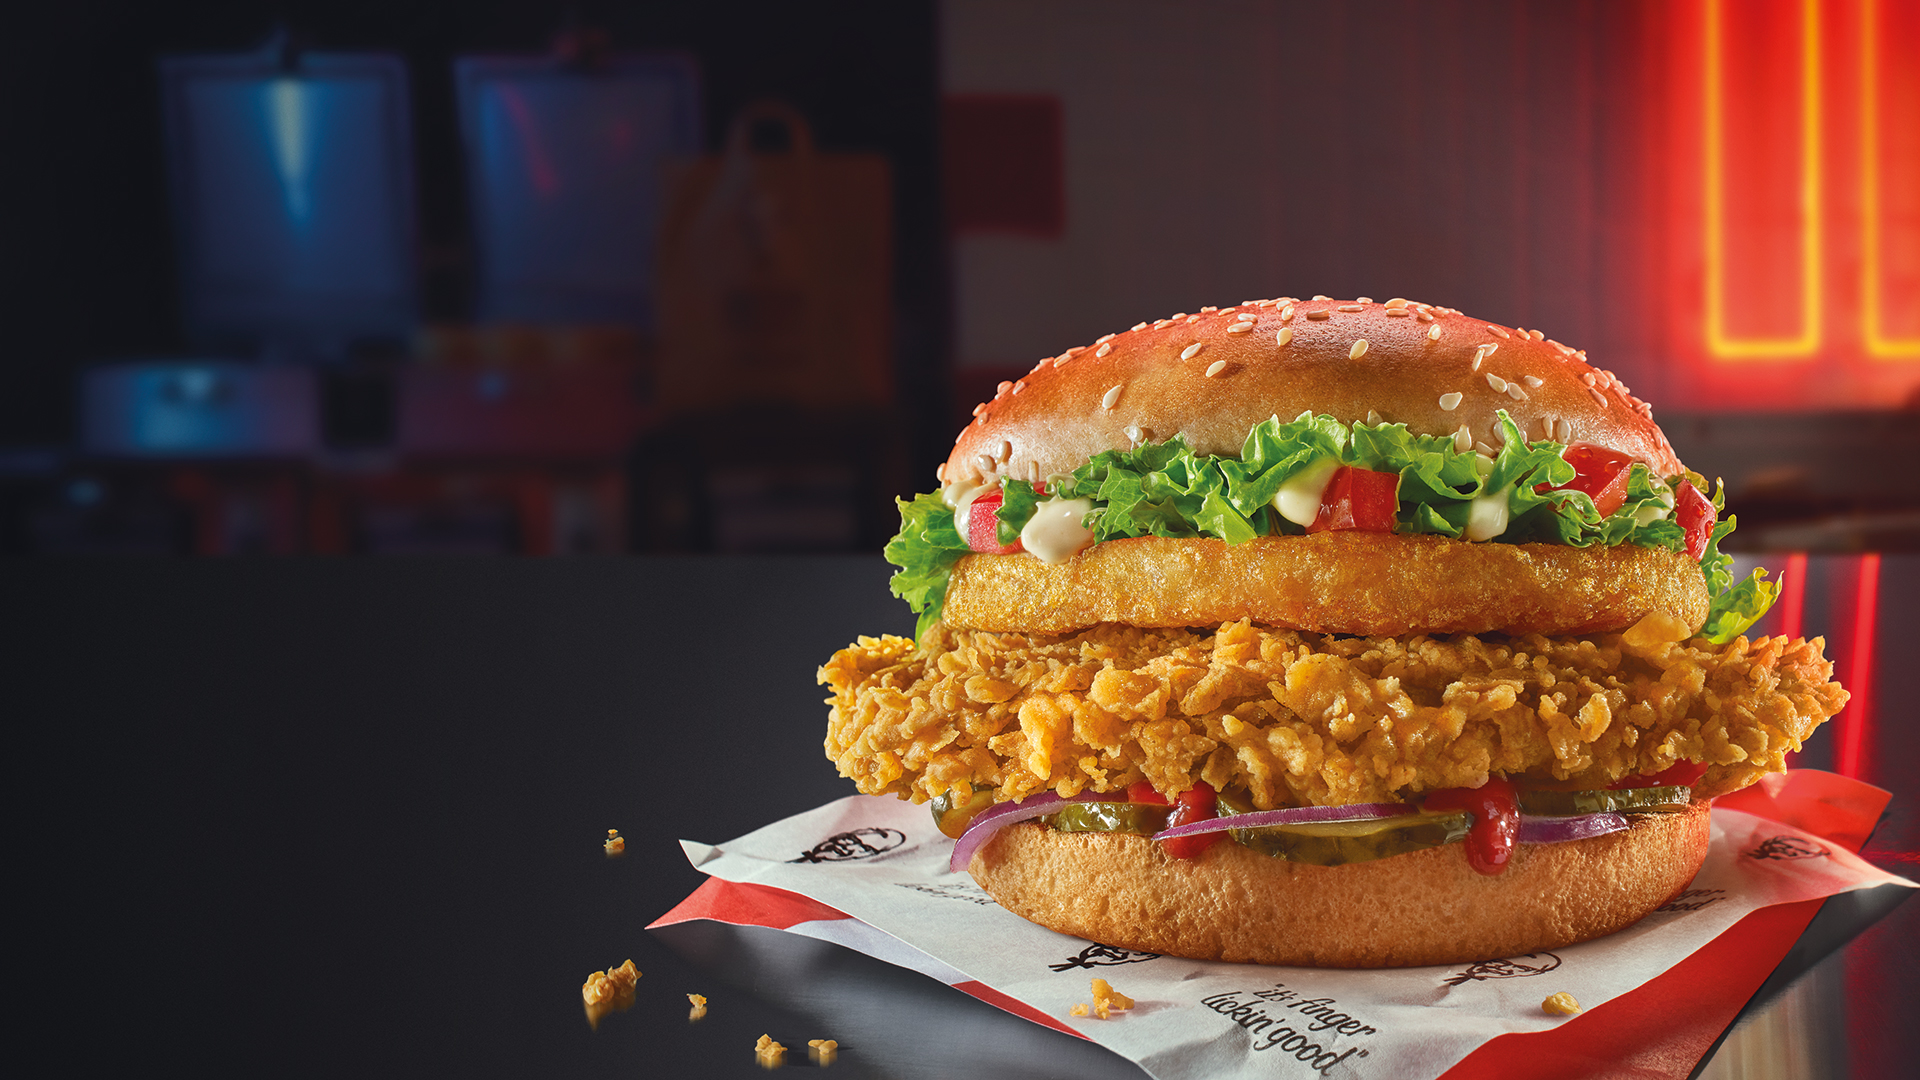 _Tower-Burger-Israel-base-image